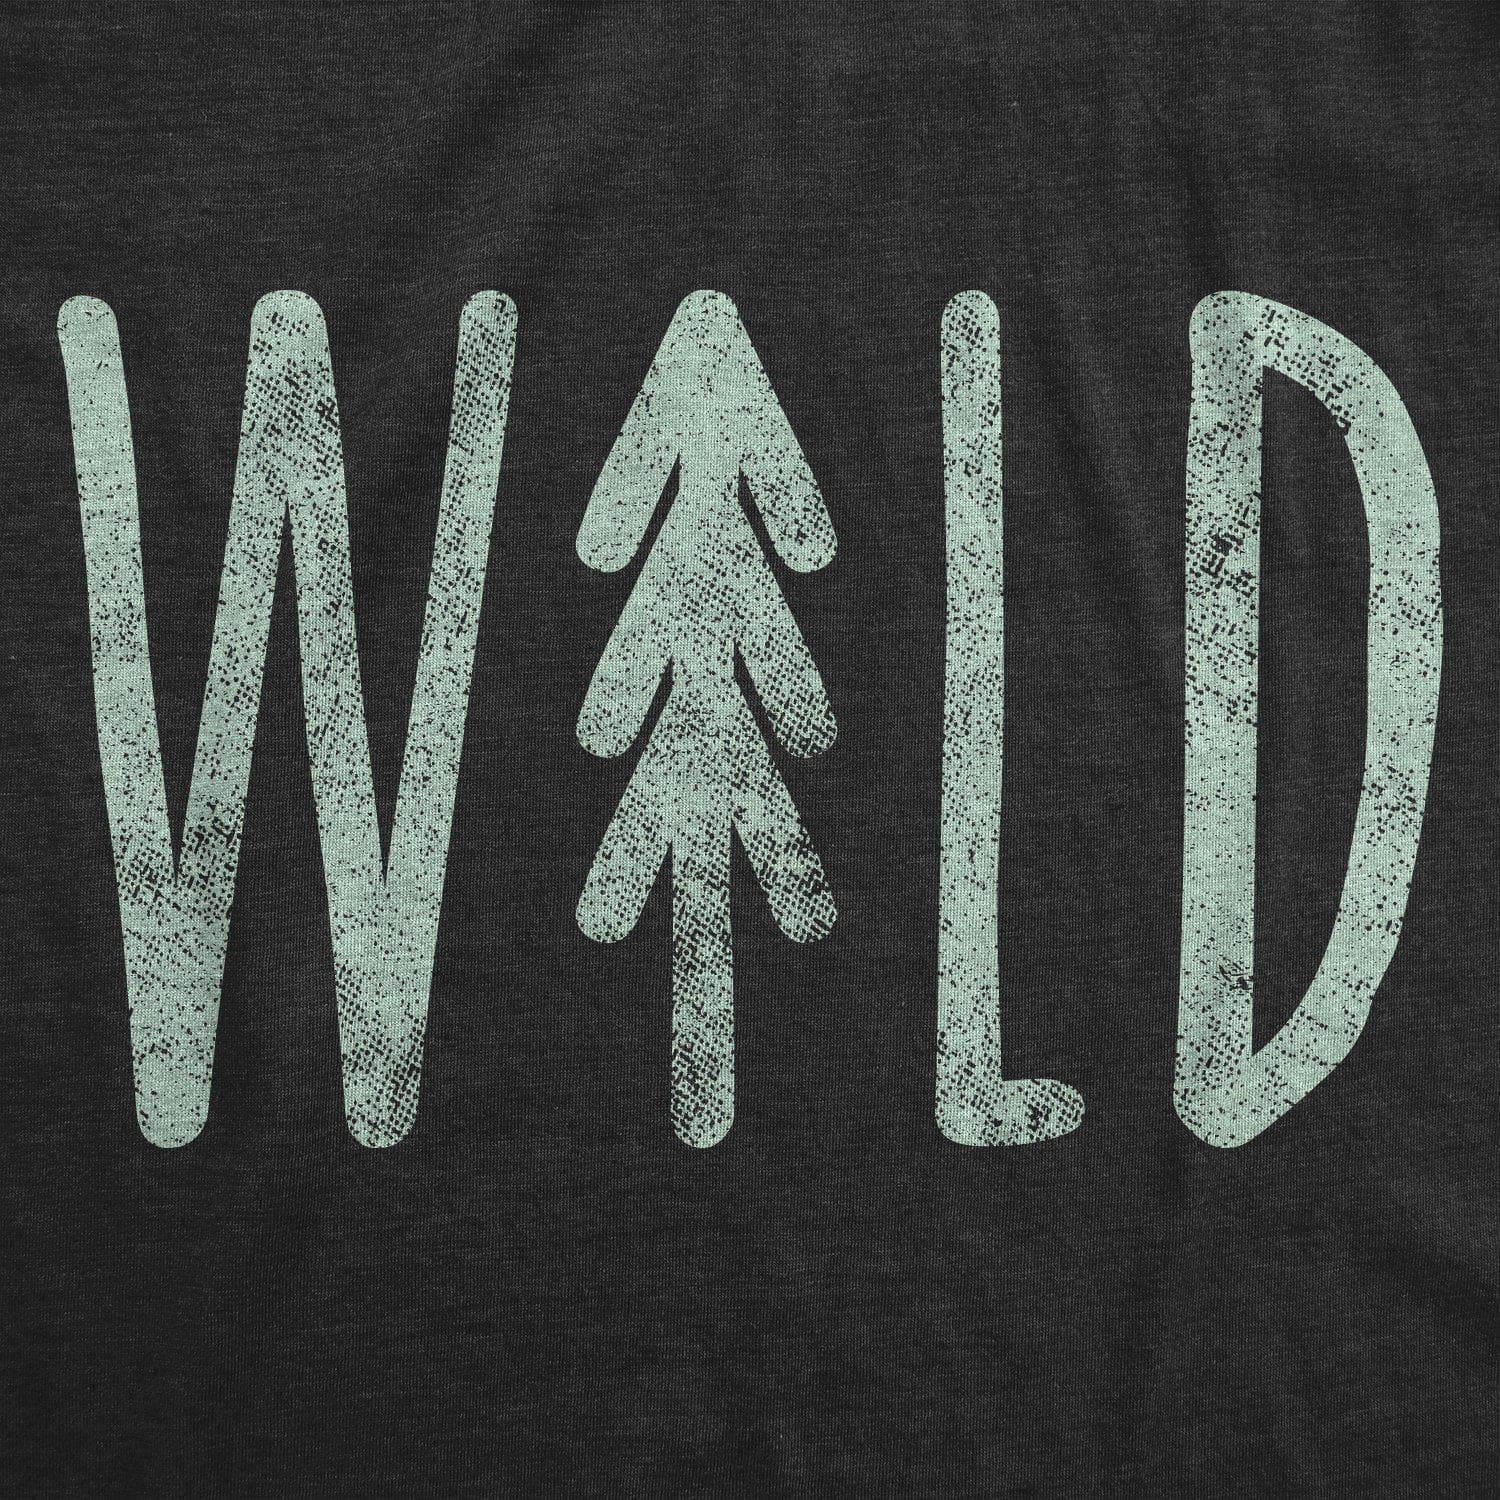 Wild Women's Tshirt - Crazy Dog T-Shirts